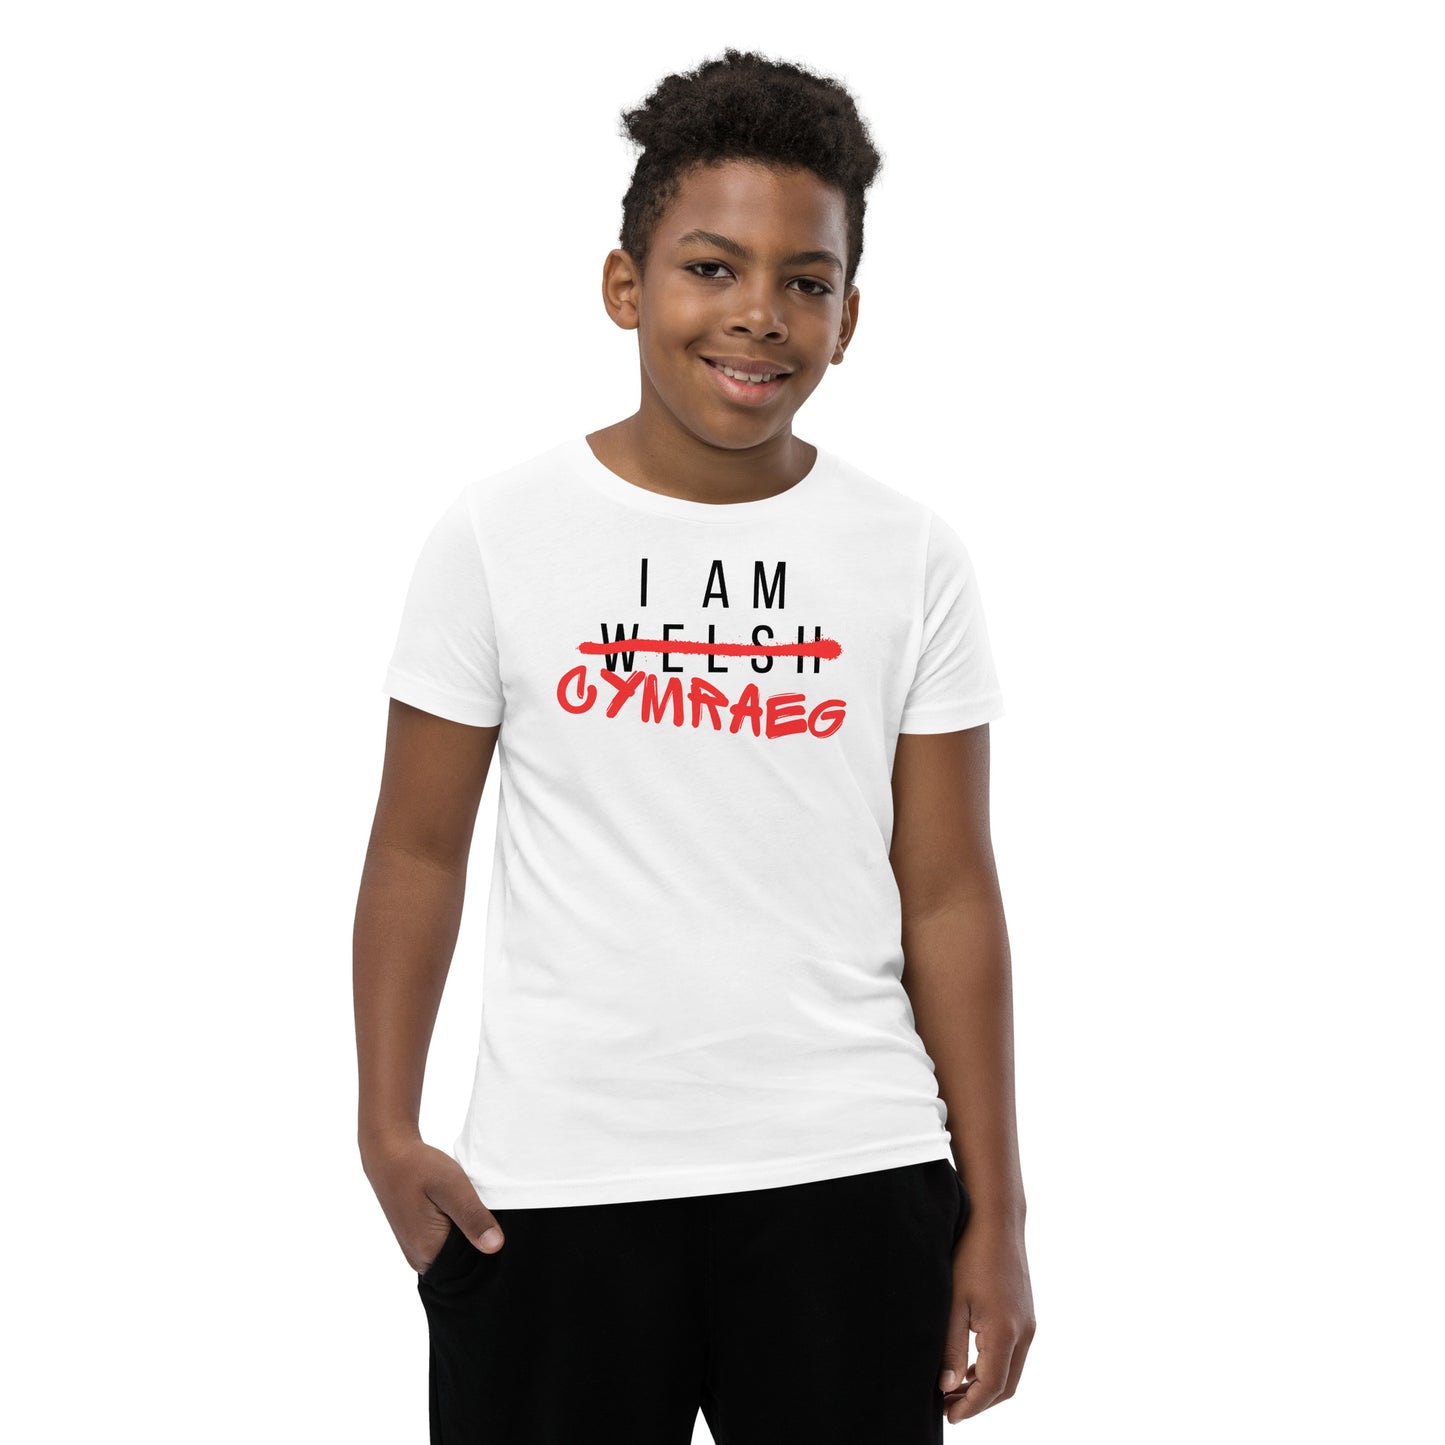 I AM Cymraeg - Youth Short Sleeve T-Shirt